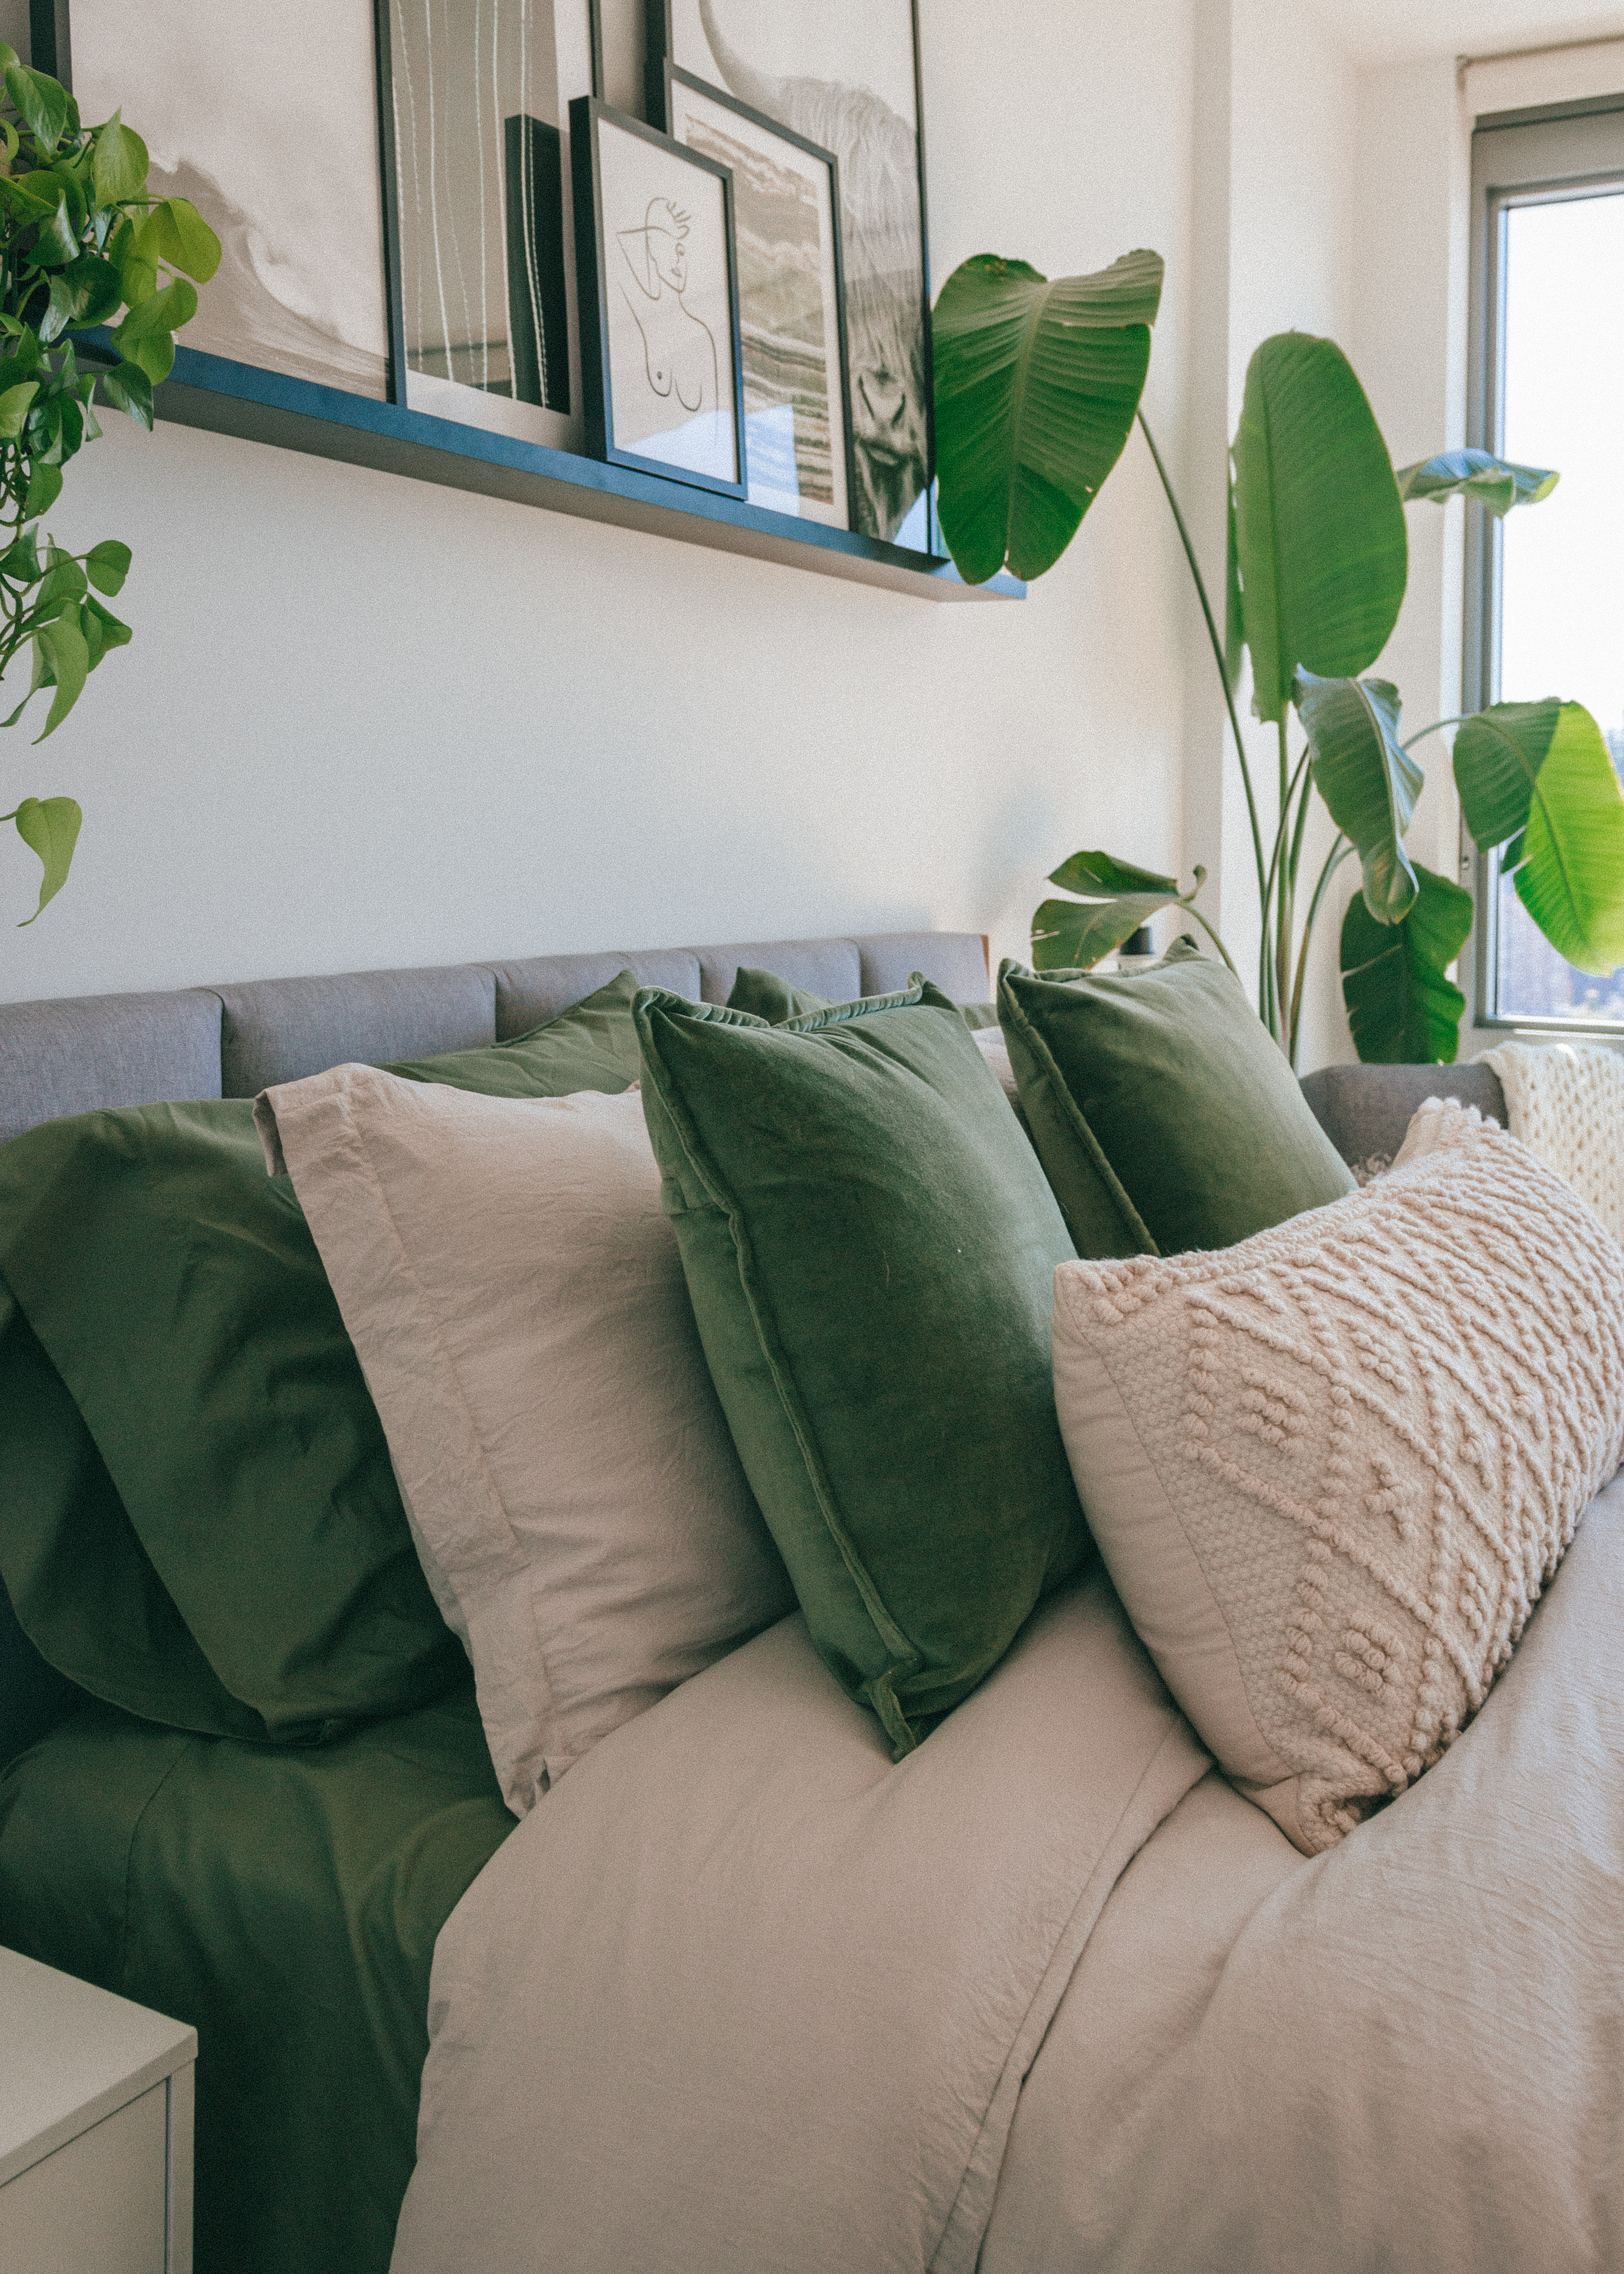 Apartment Bedroom Pillows Lifestyle Decor Mid Century Cozy Home